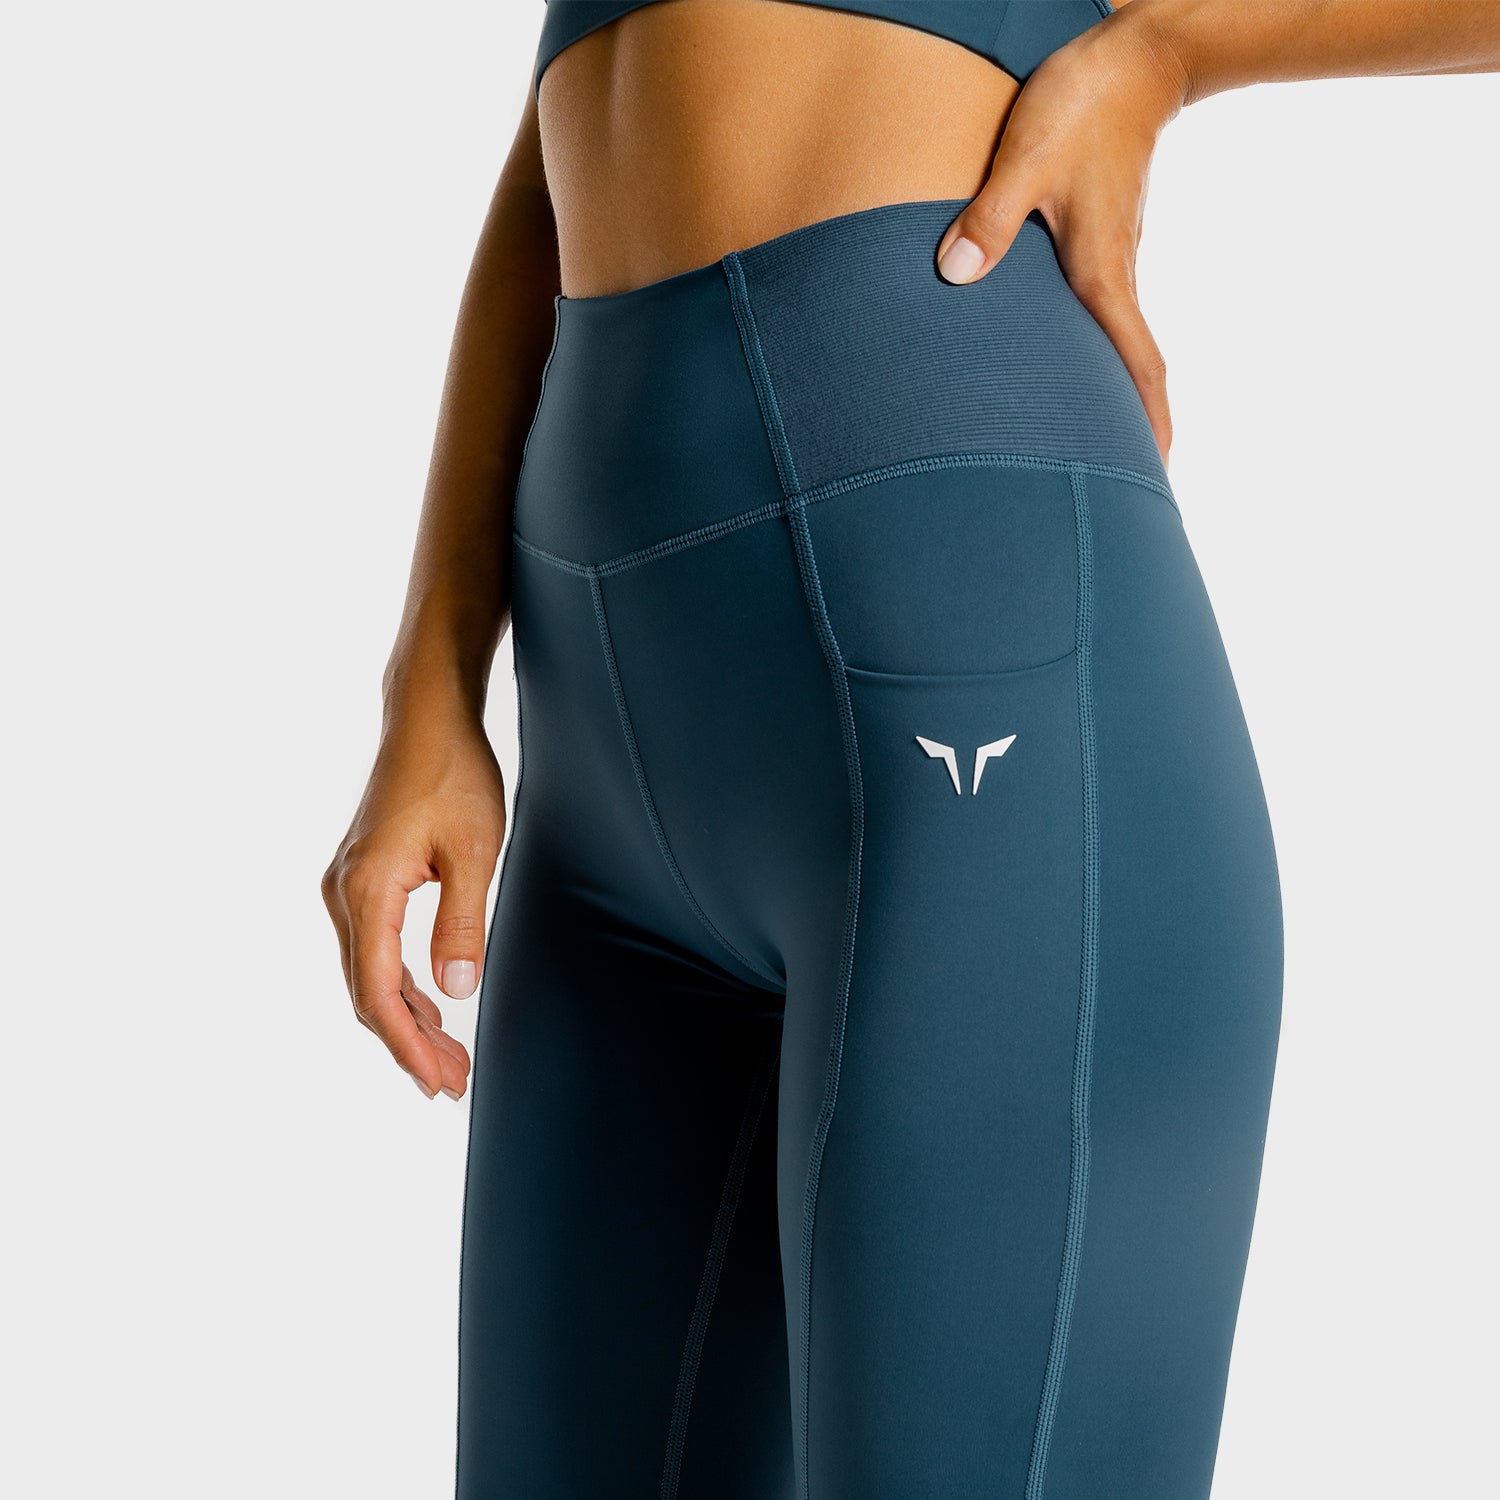 squatwolf-workout-clothes-core-leggings-blue-gym-leggings-for-women